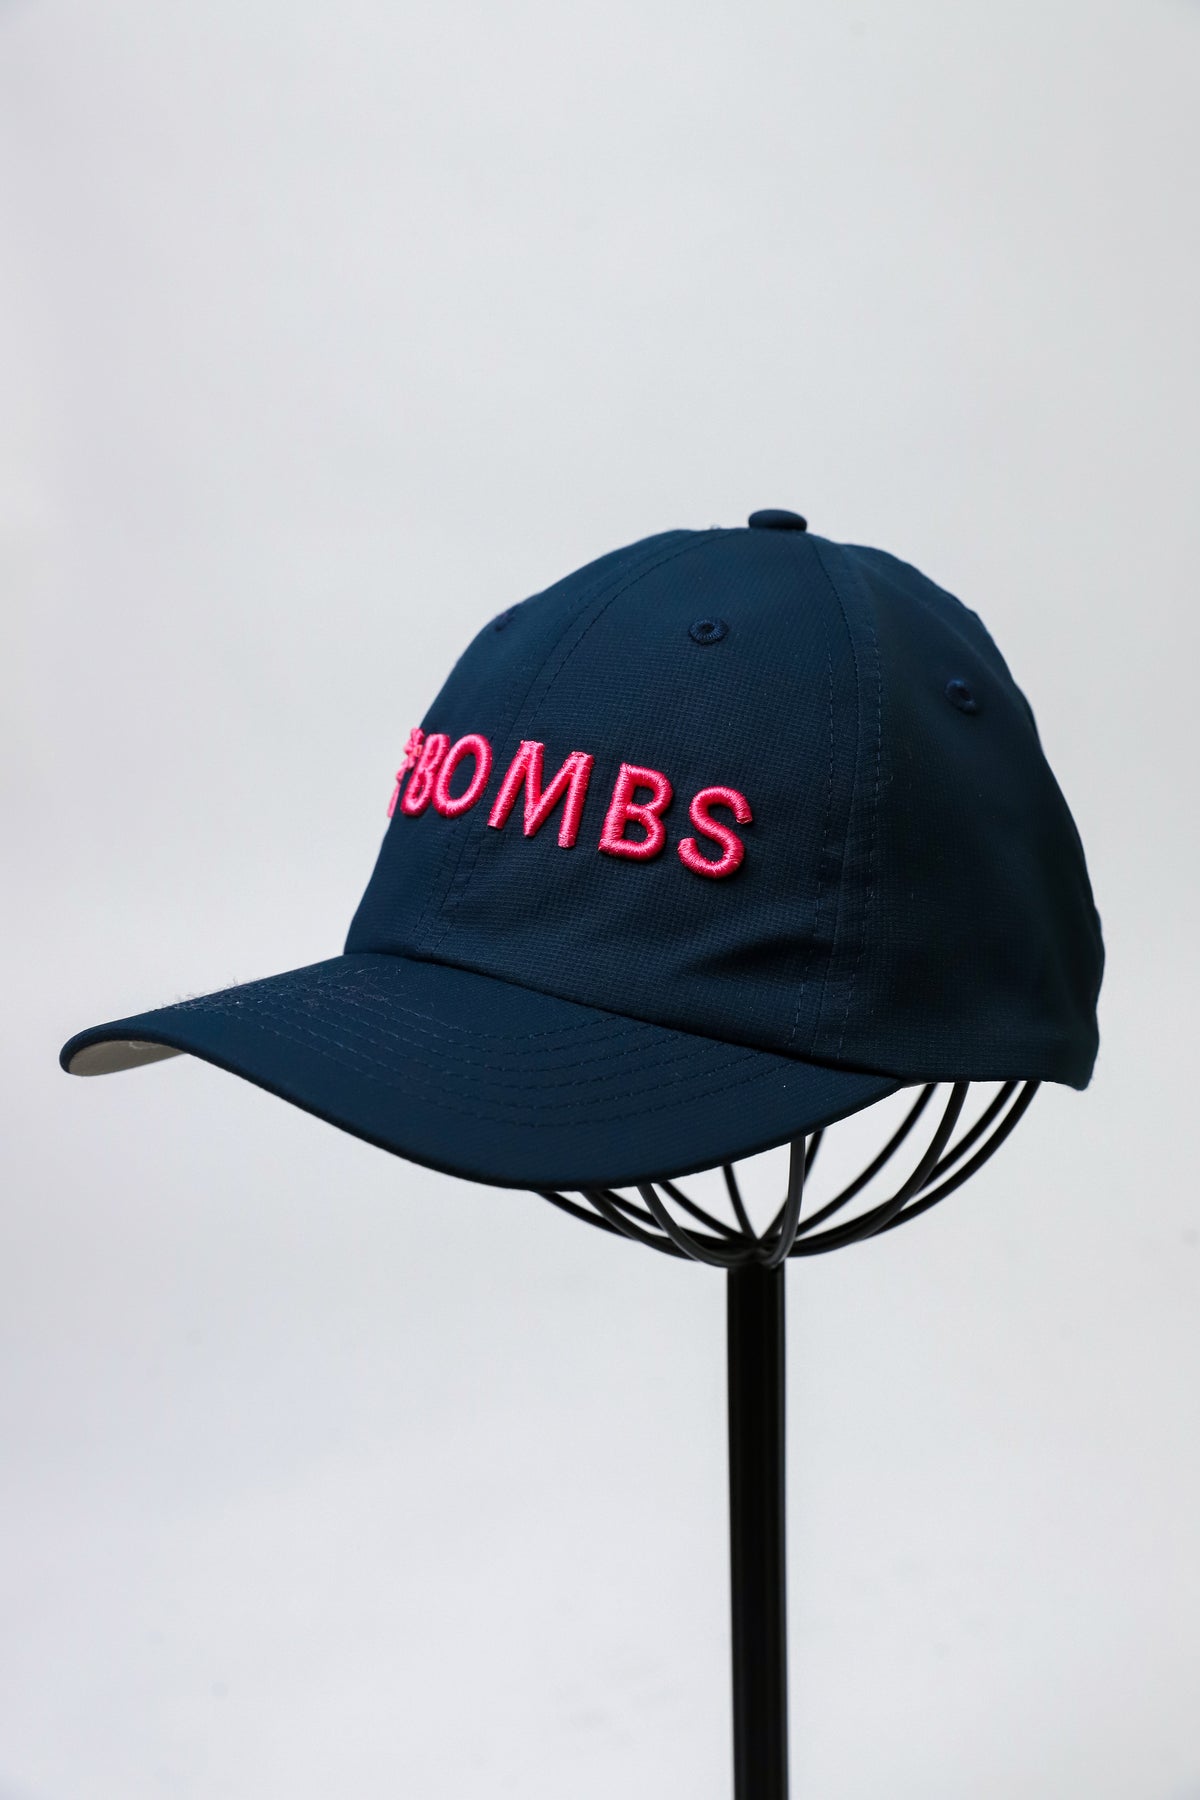 F*BOMBS Hat